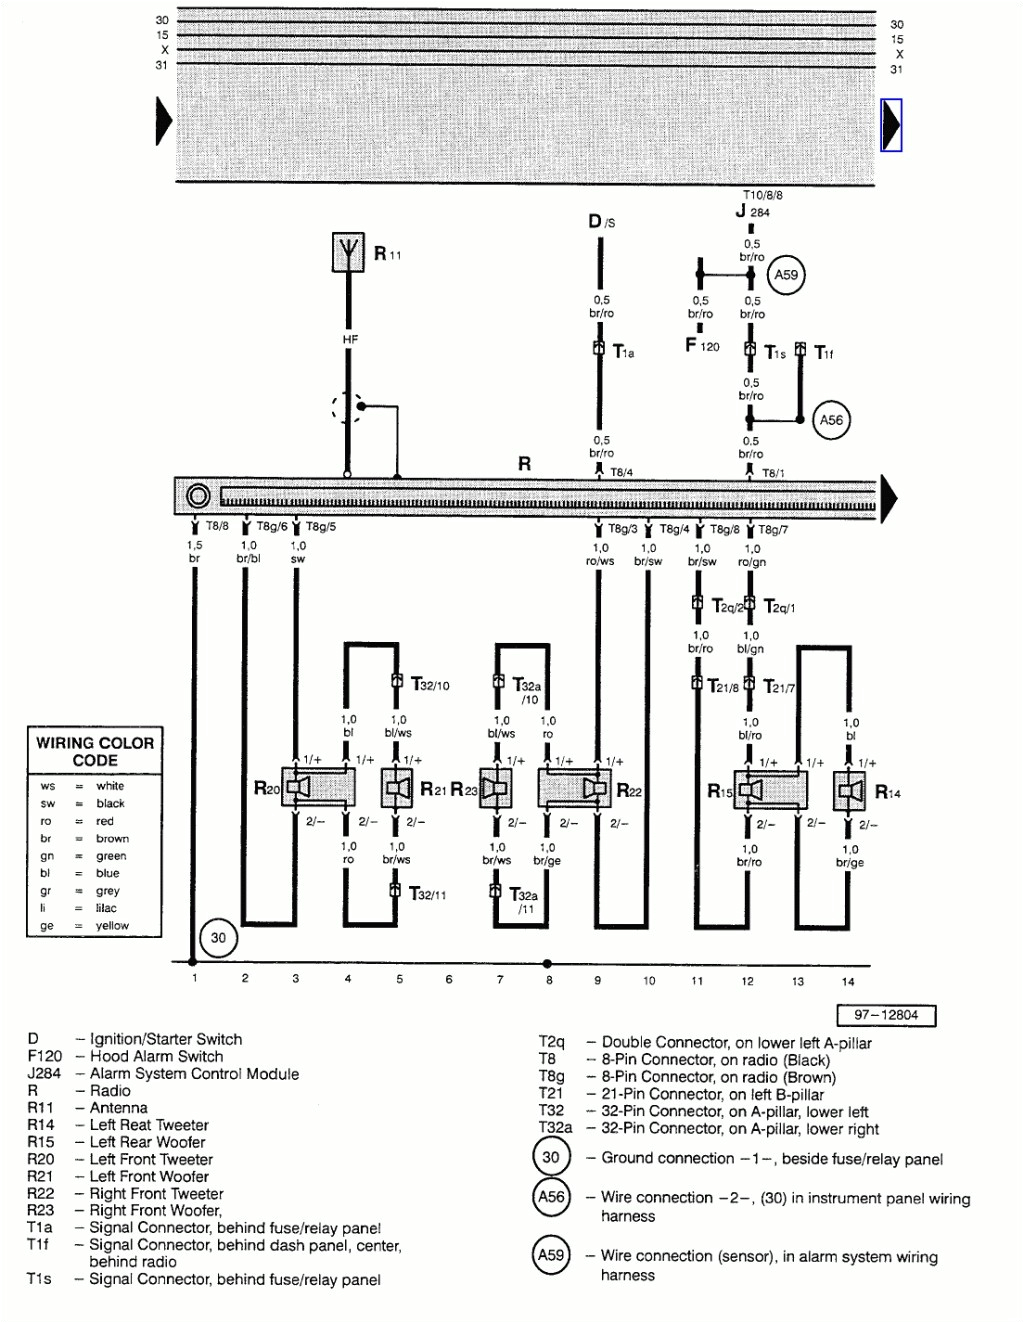 2008 vw wiring diagram wiring diagram rows vw tiguan 2008 wiring diagram 2008 rabbit wiring diagram